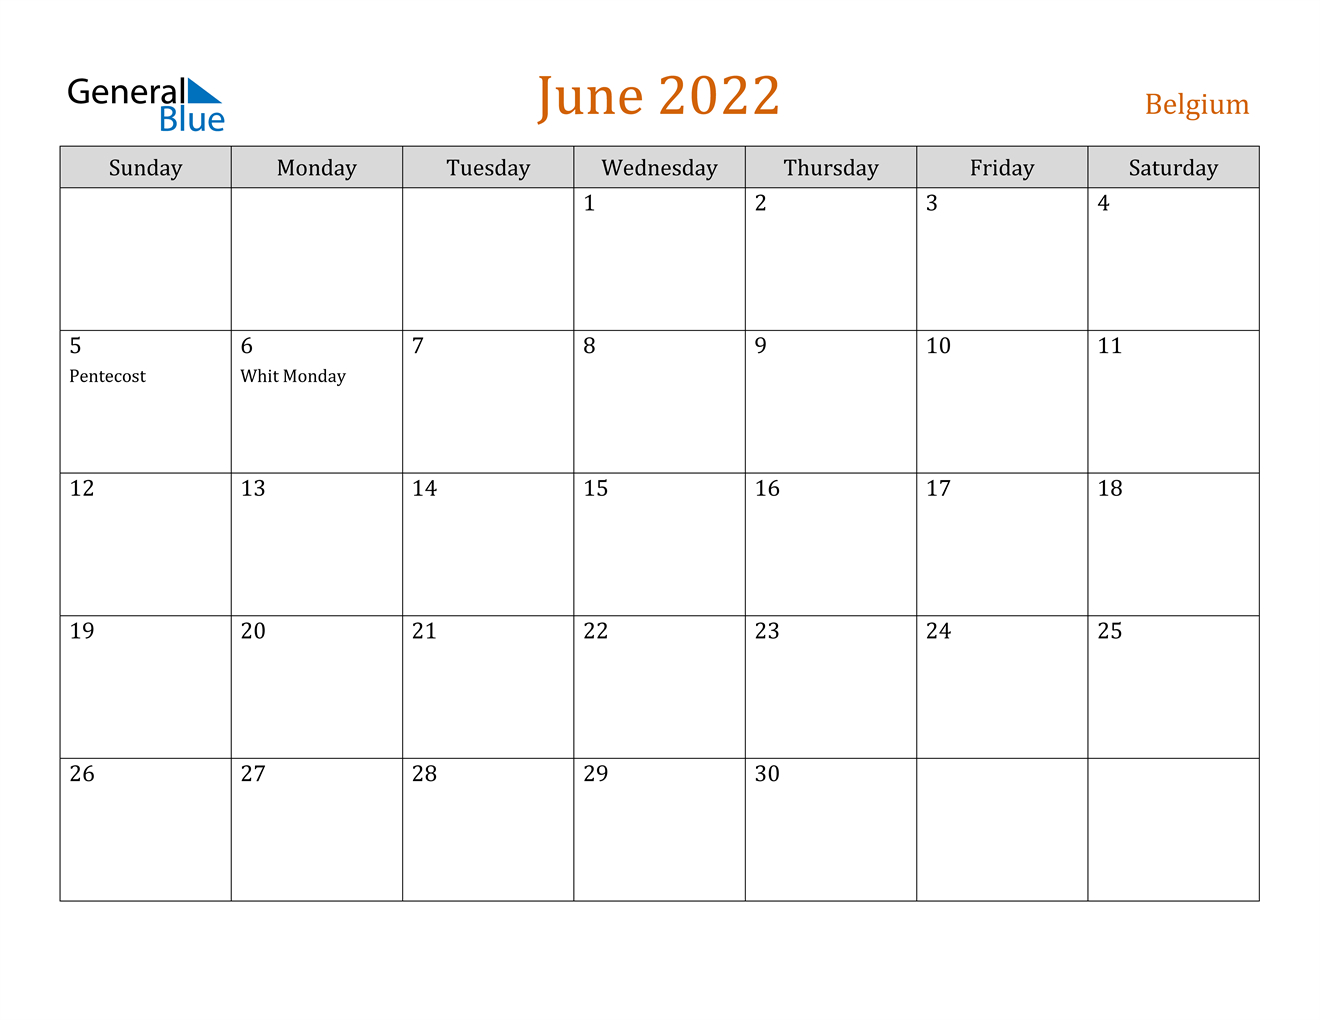 June 2022 Calendar - Belgium